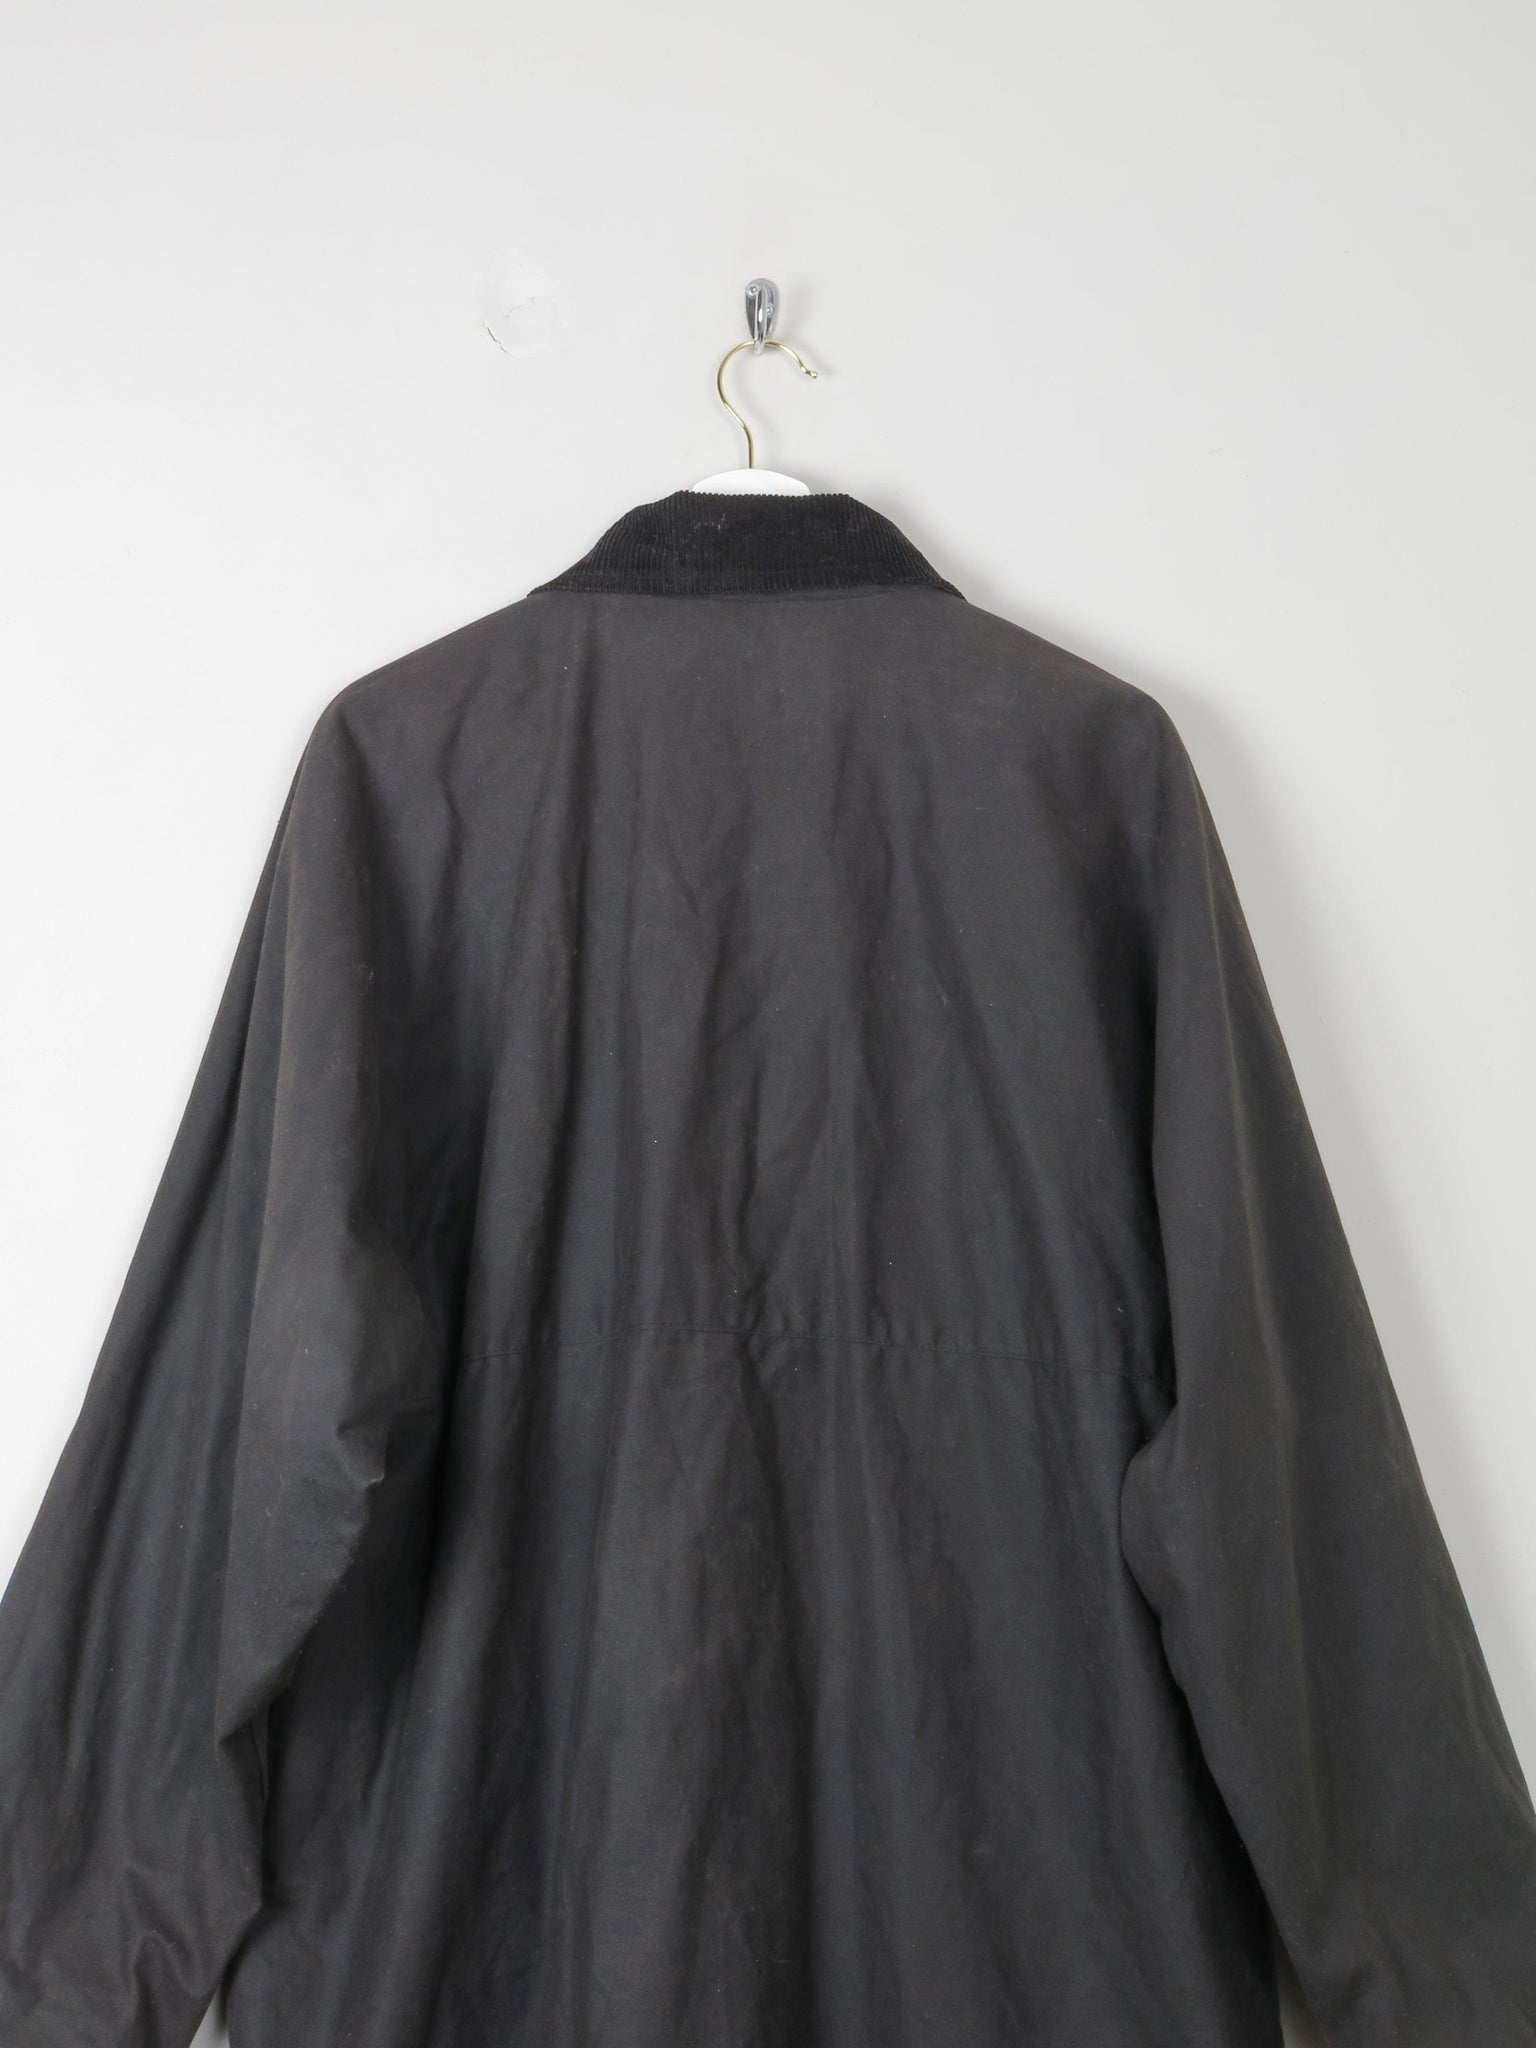 Men's Vintage Wax Jacket Black  XL - The Harlequin